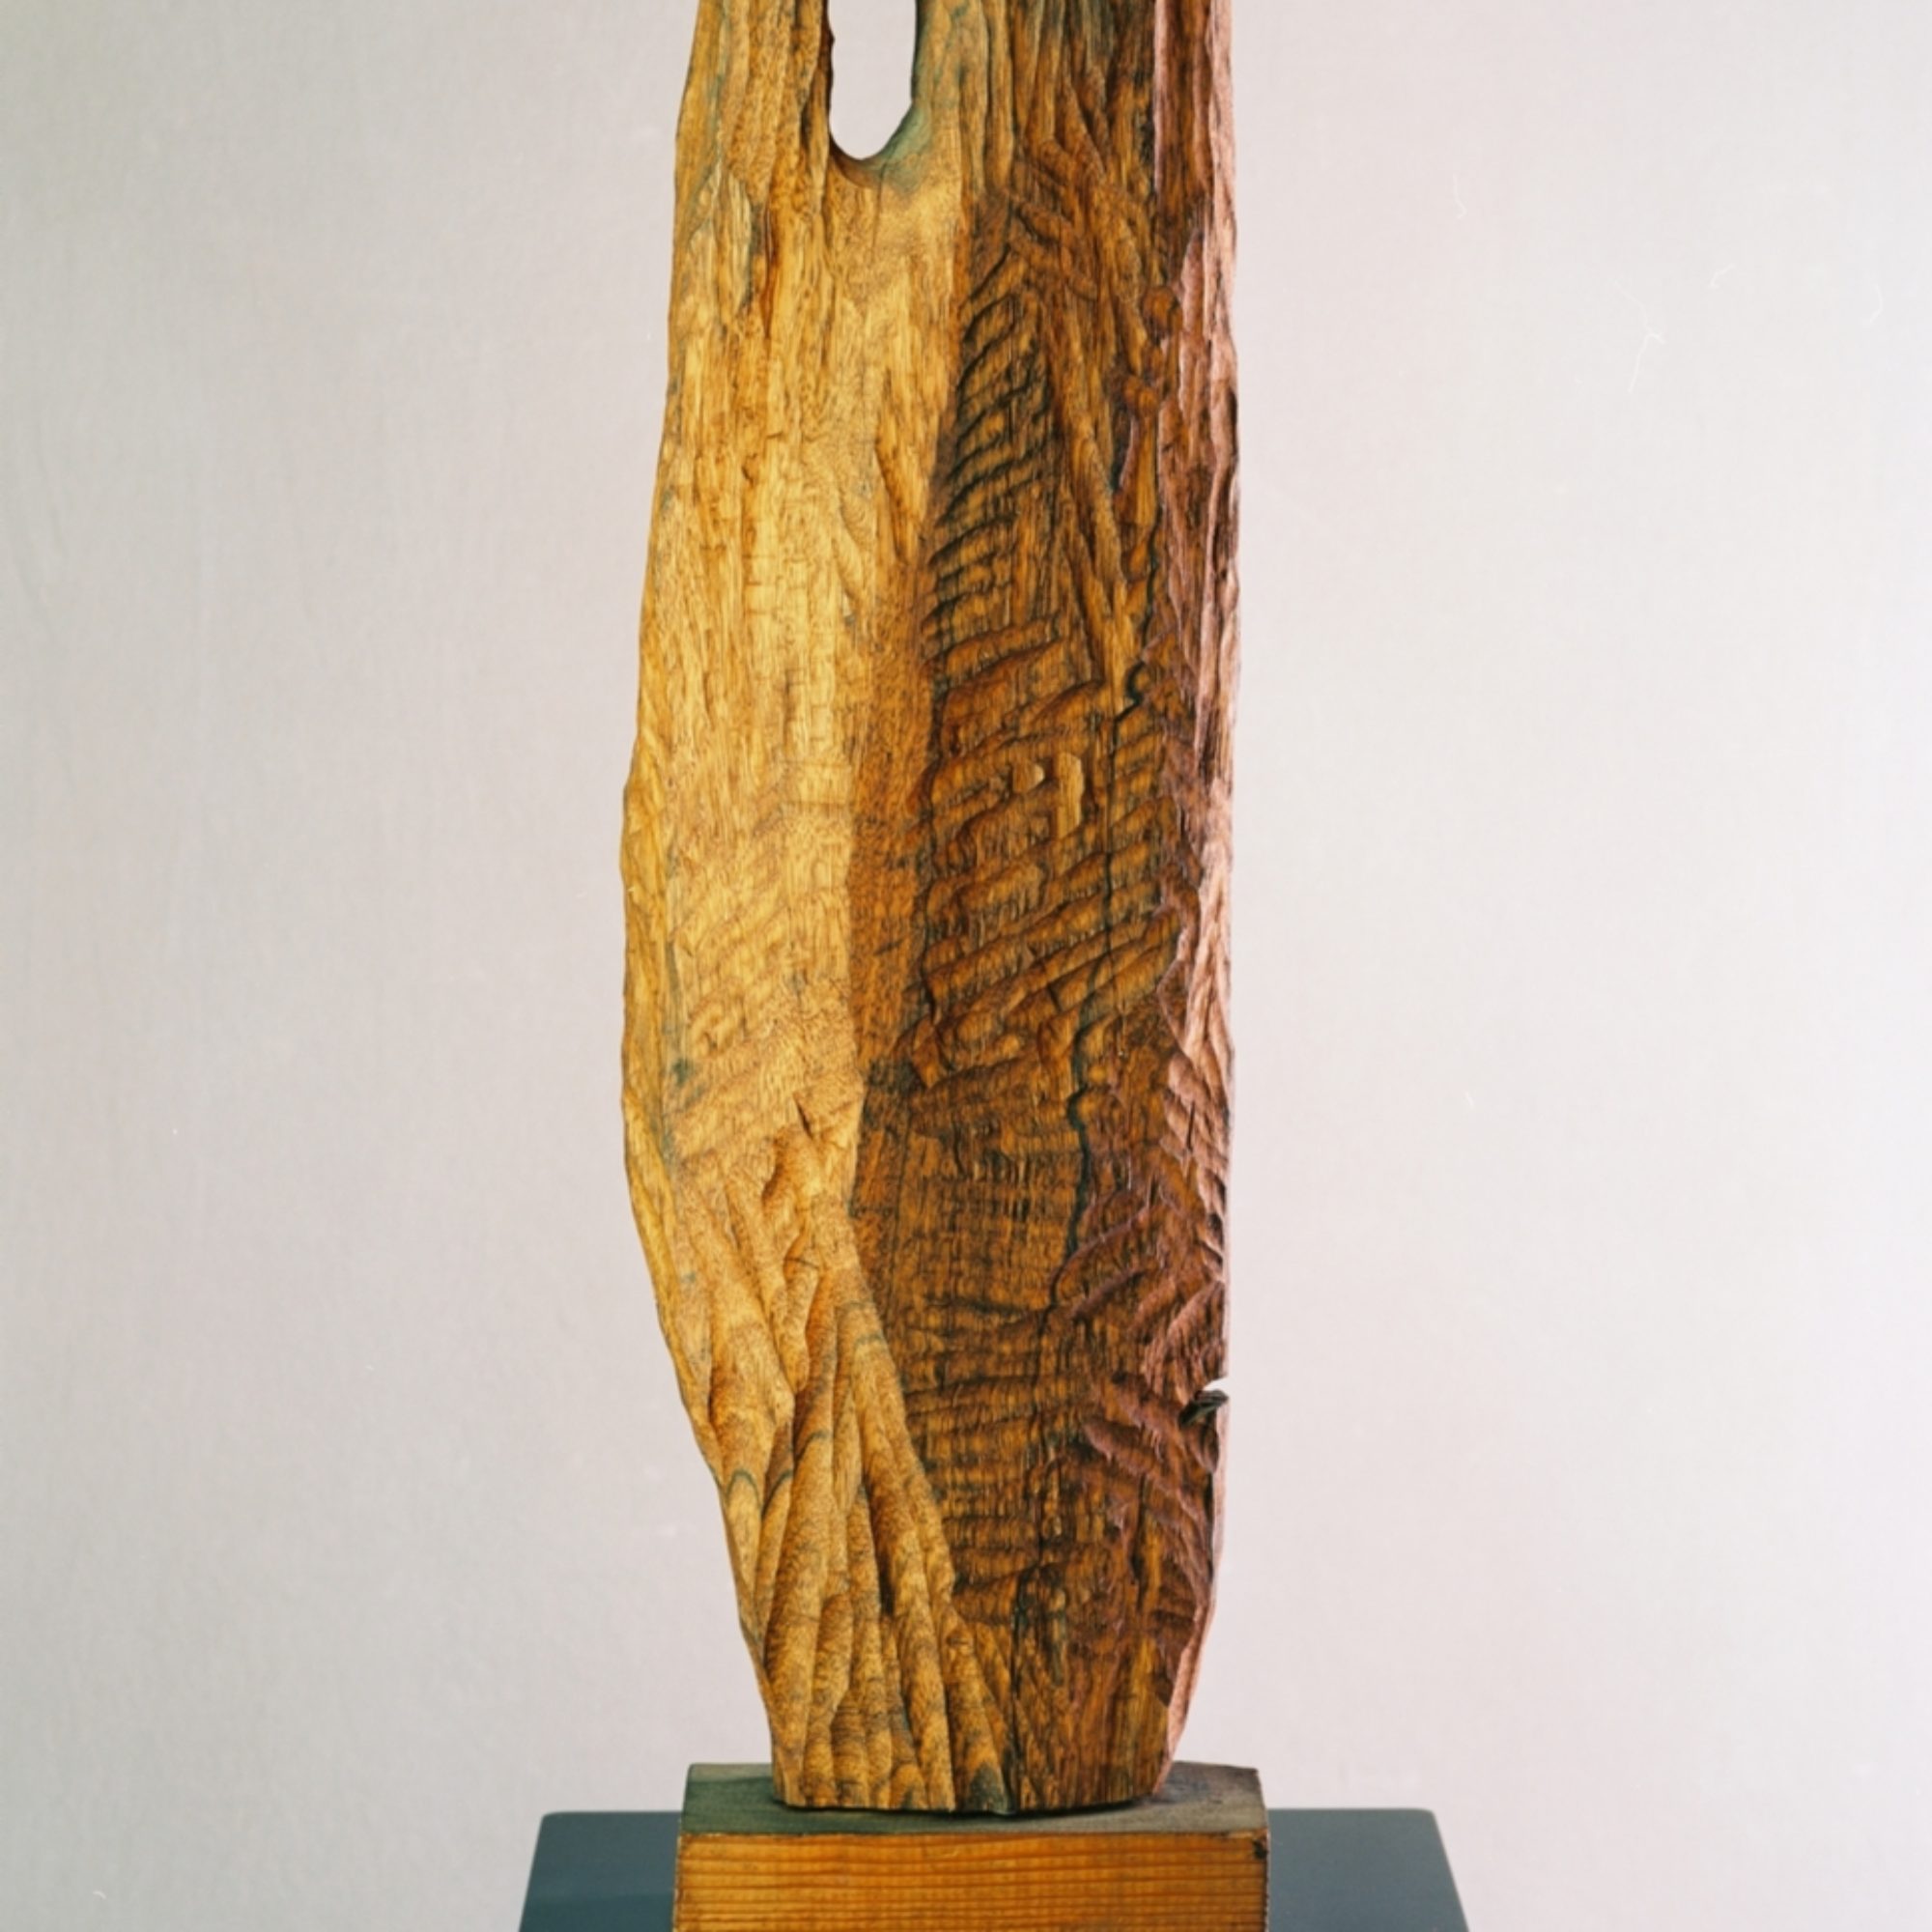 Carved wood sculpture